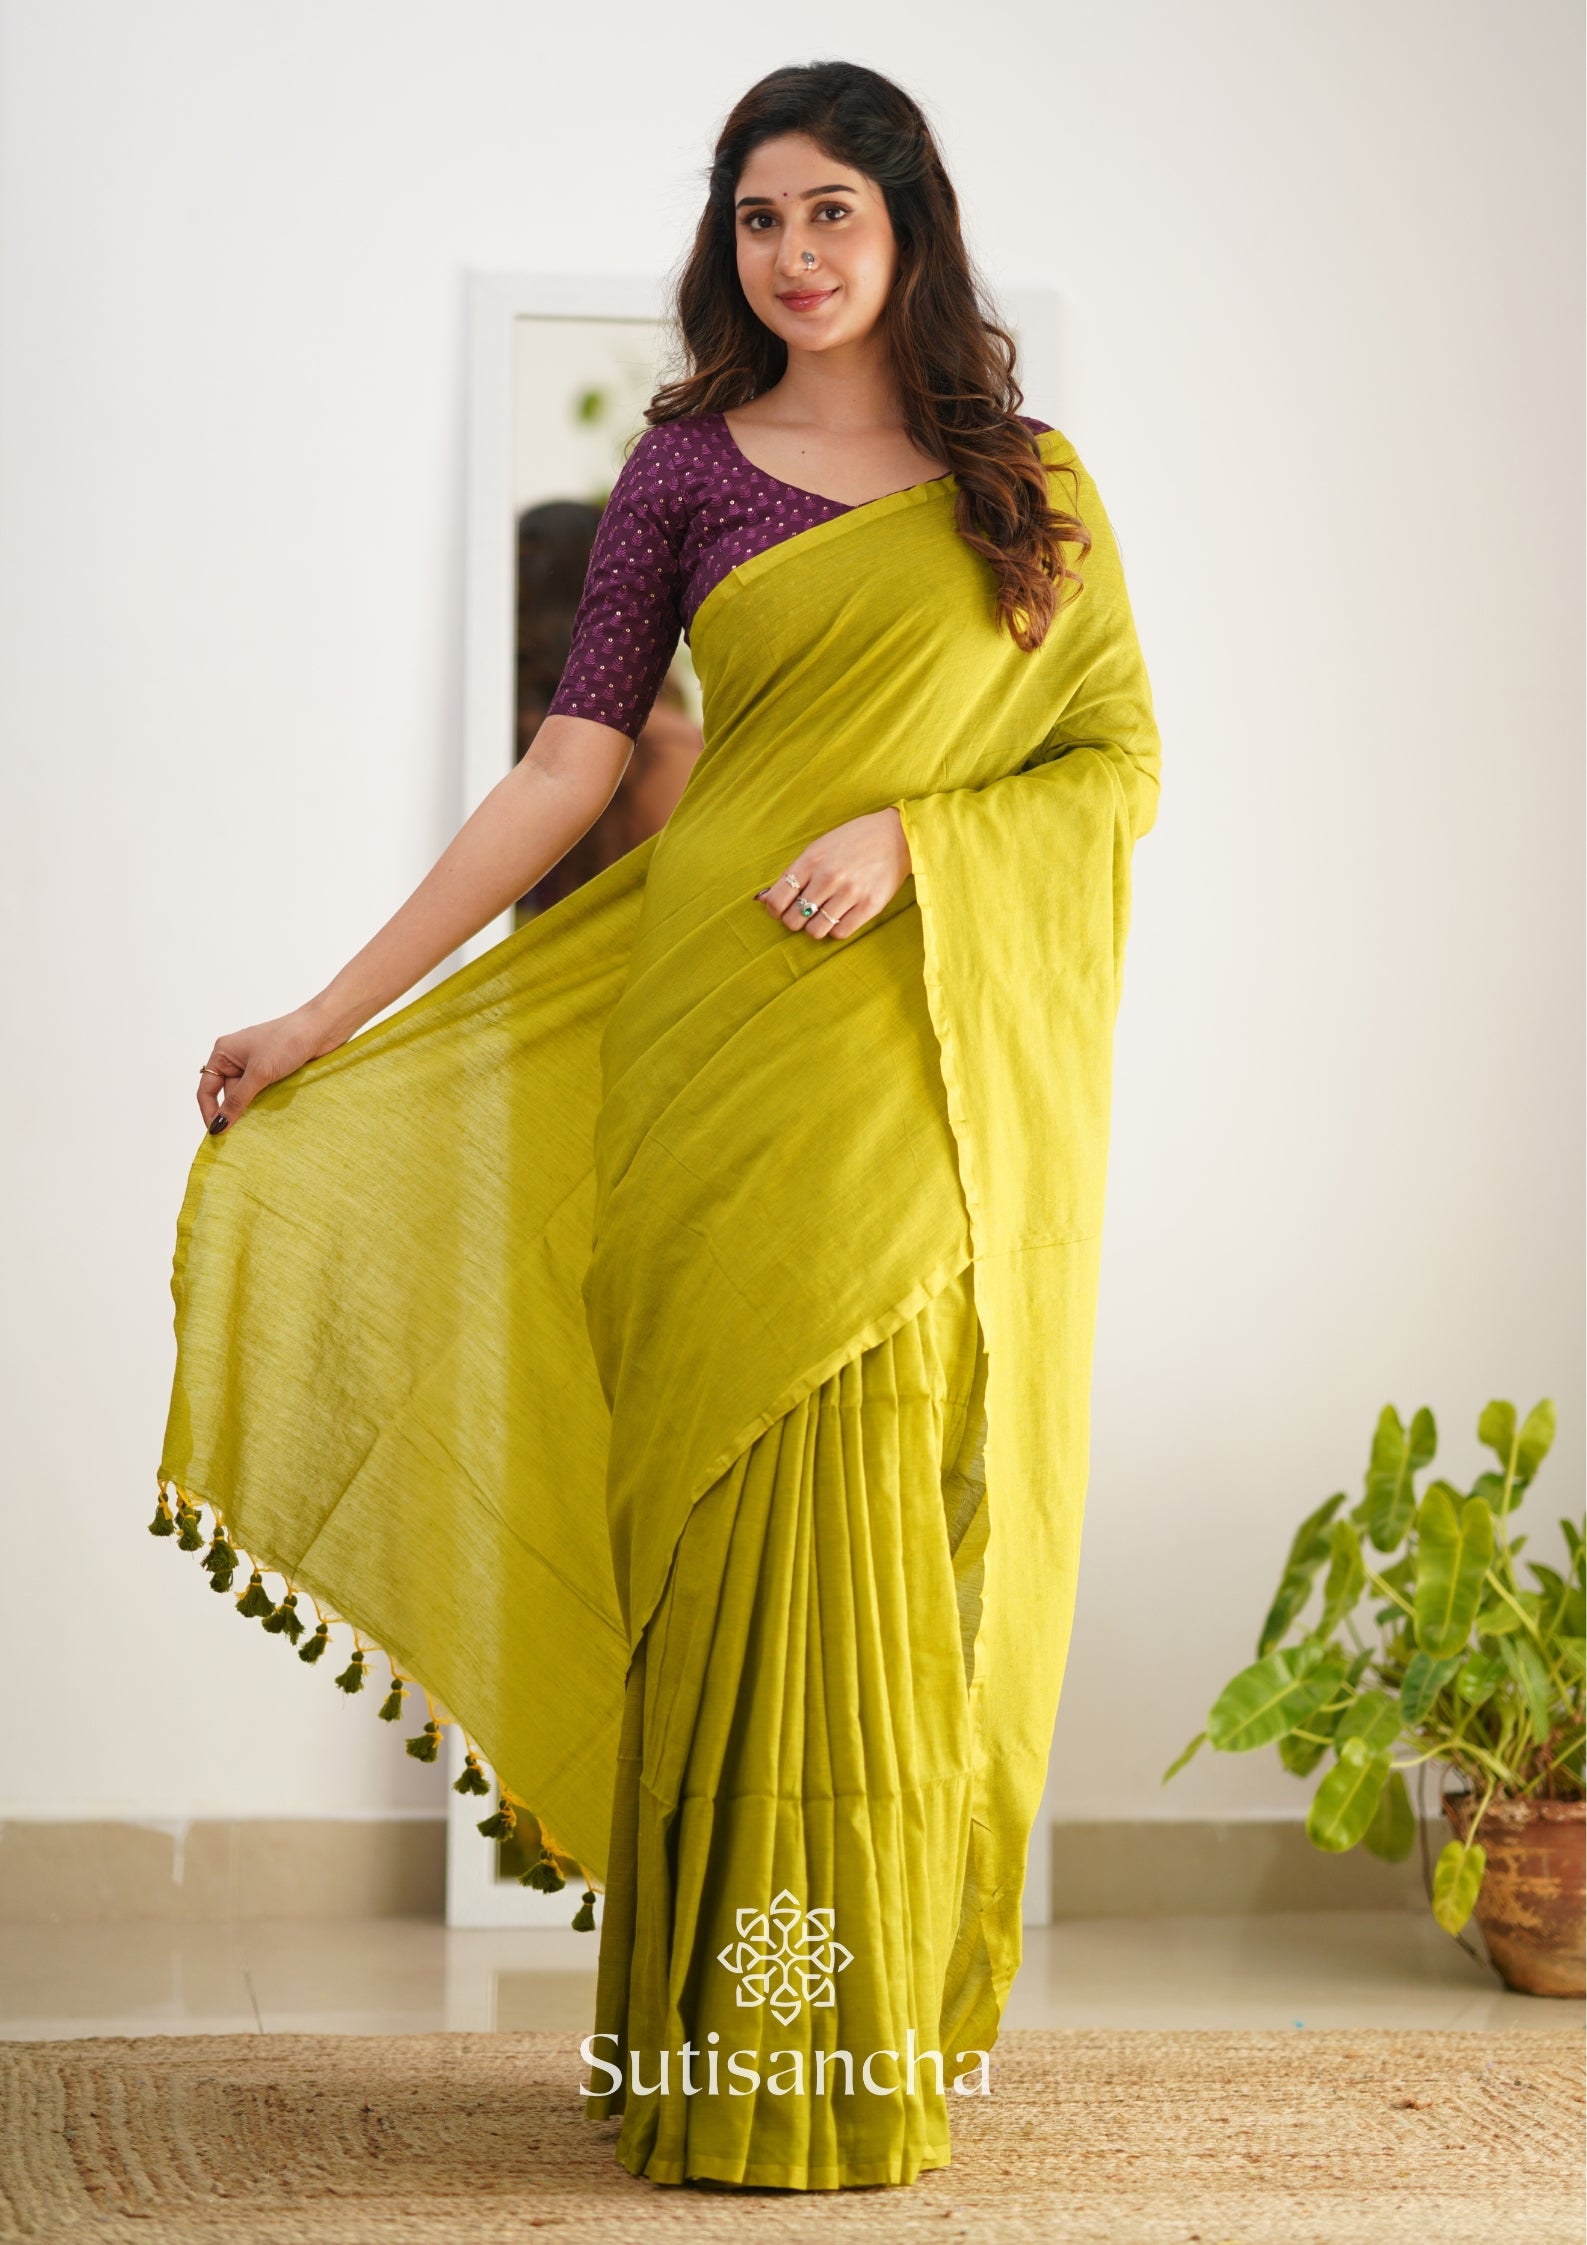 Sutisancha Lime colour Khadi Saree with designer Blouse